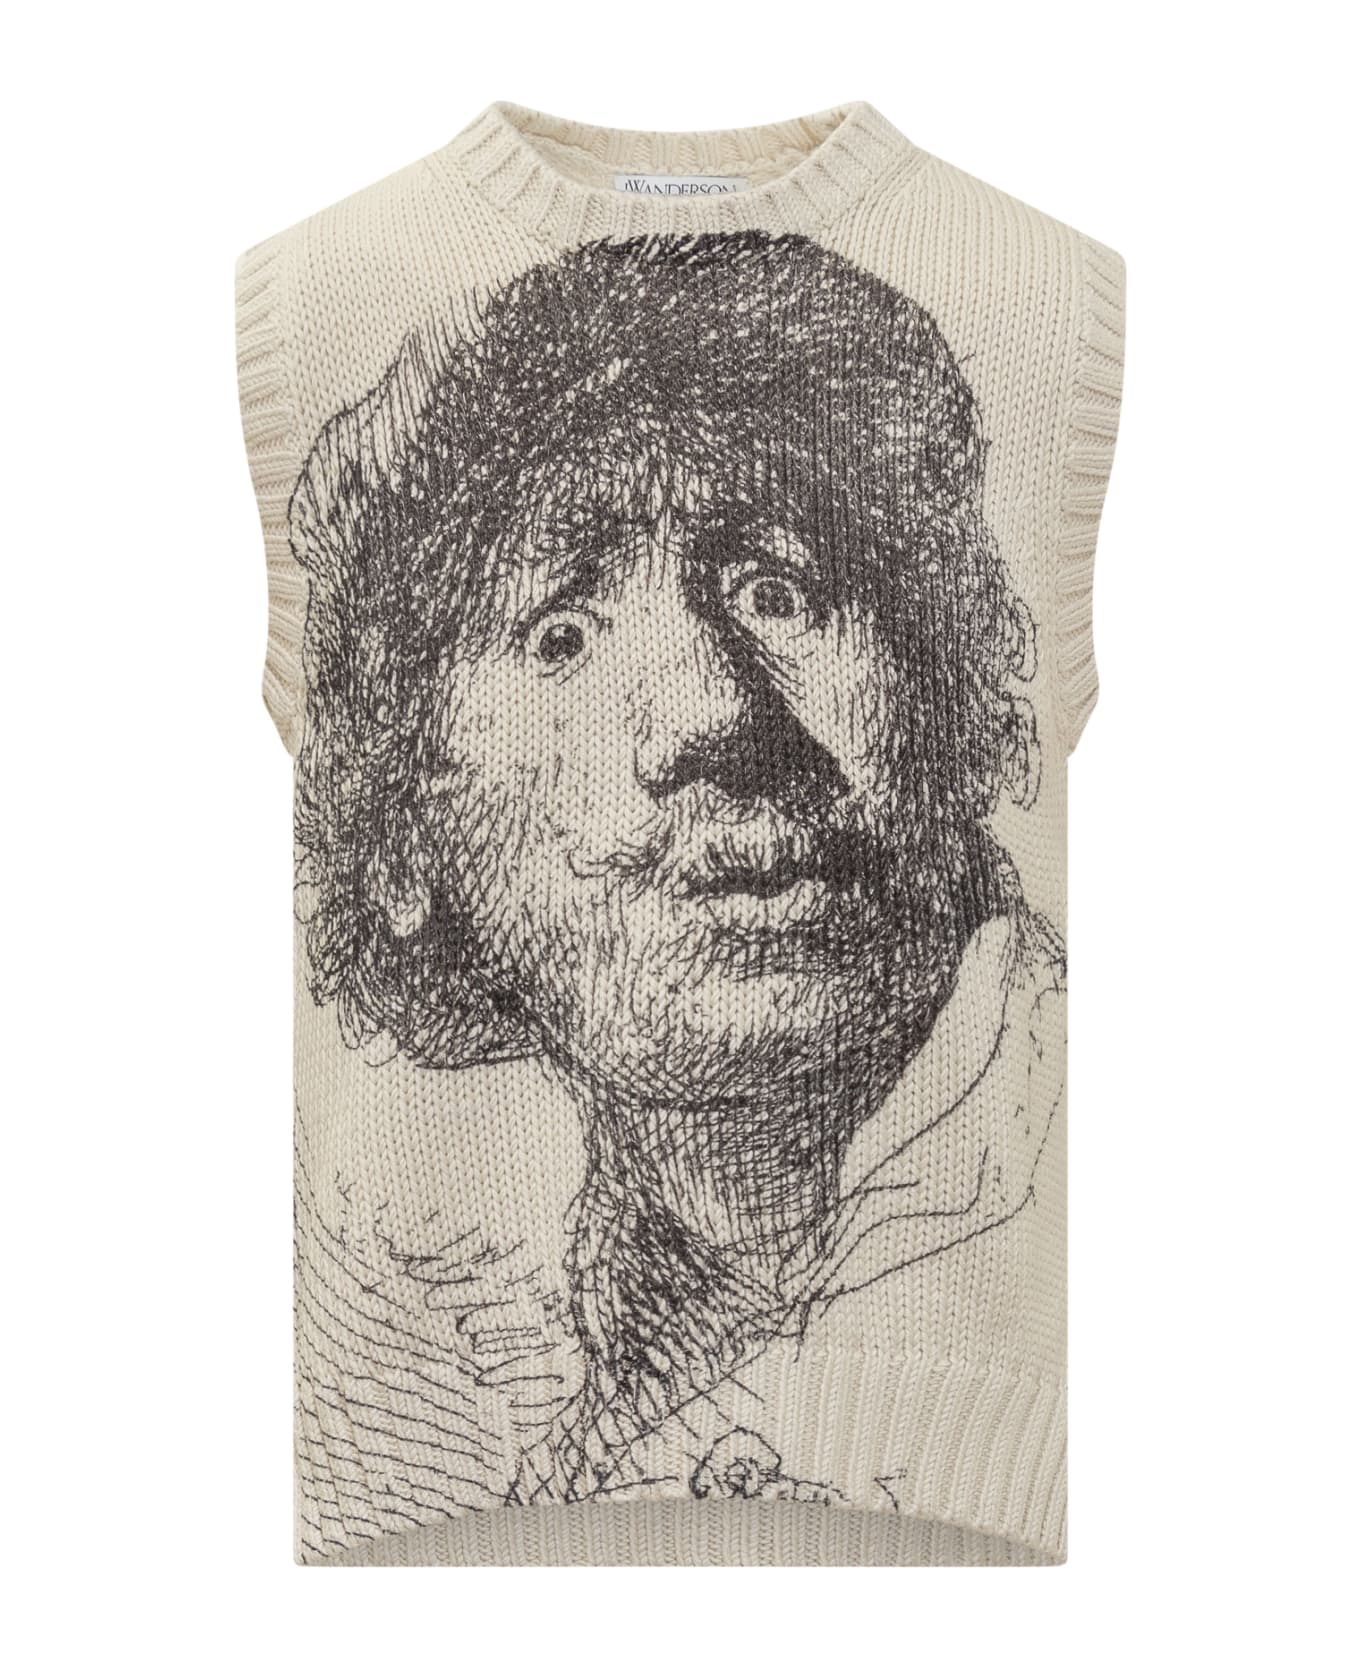 J.W. Anderson Rembrandt Vest - OFF WHITE